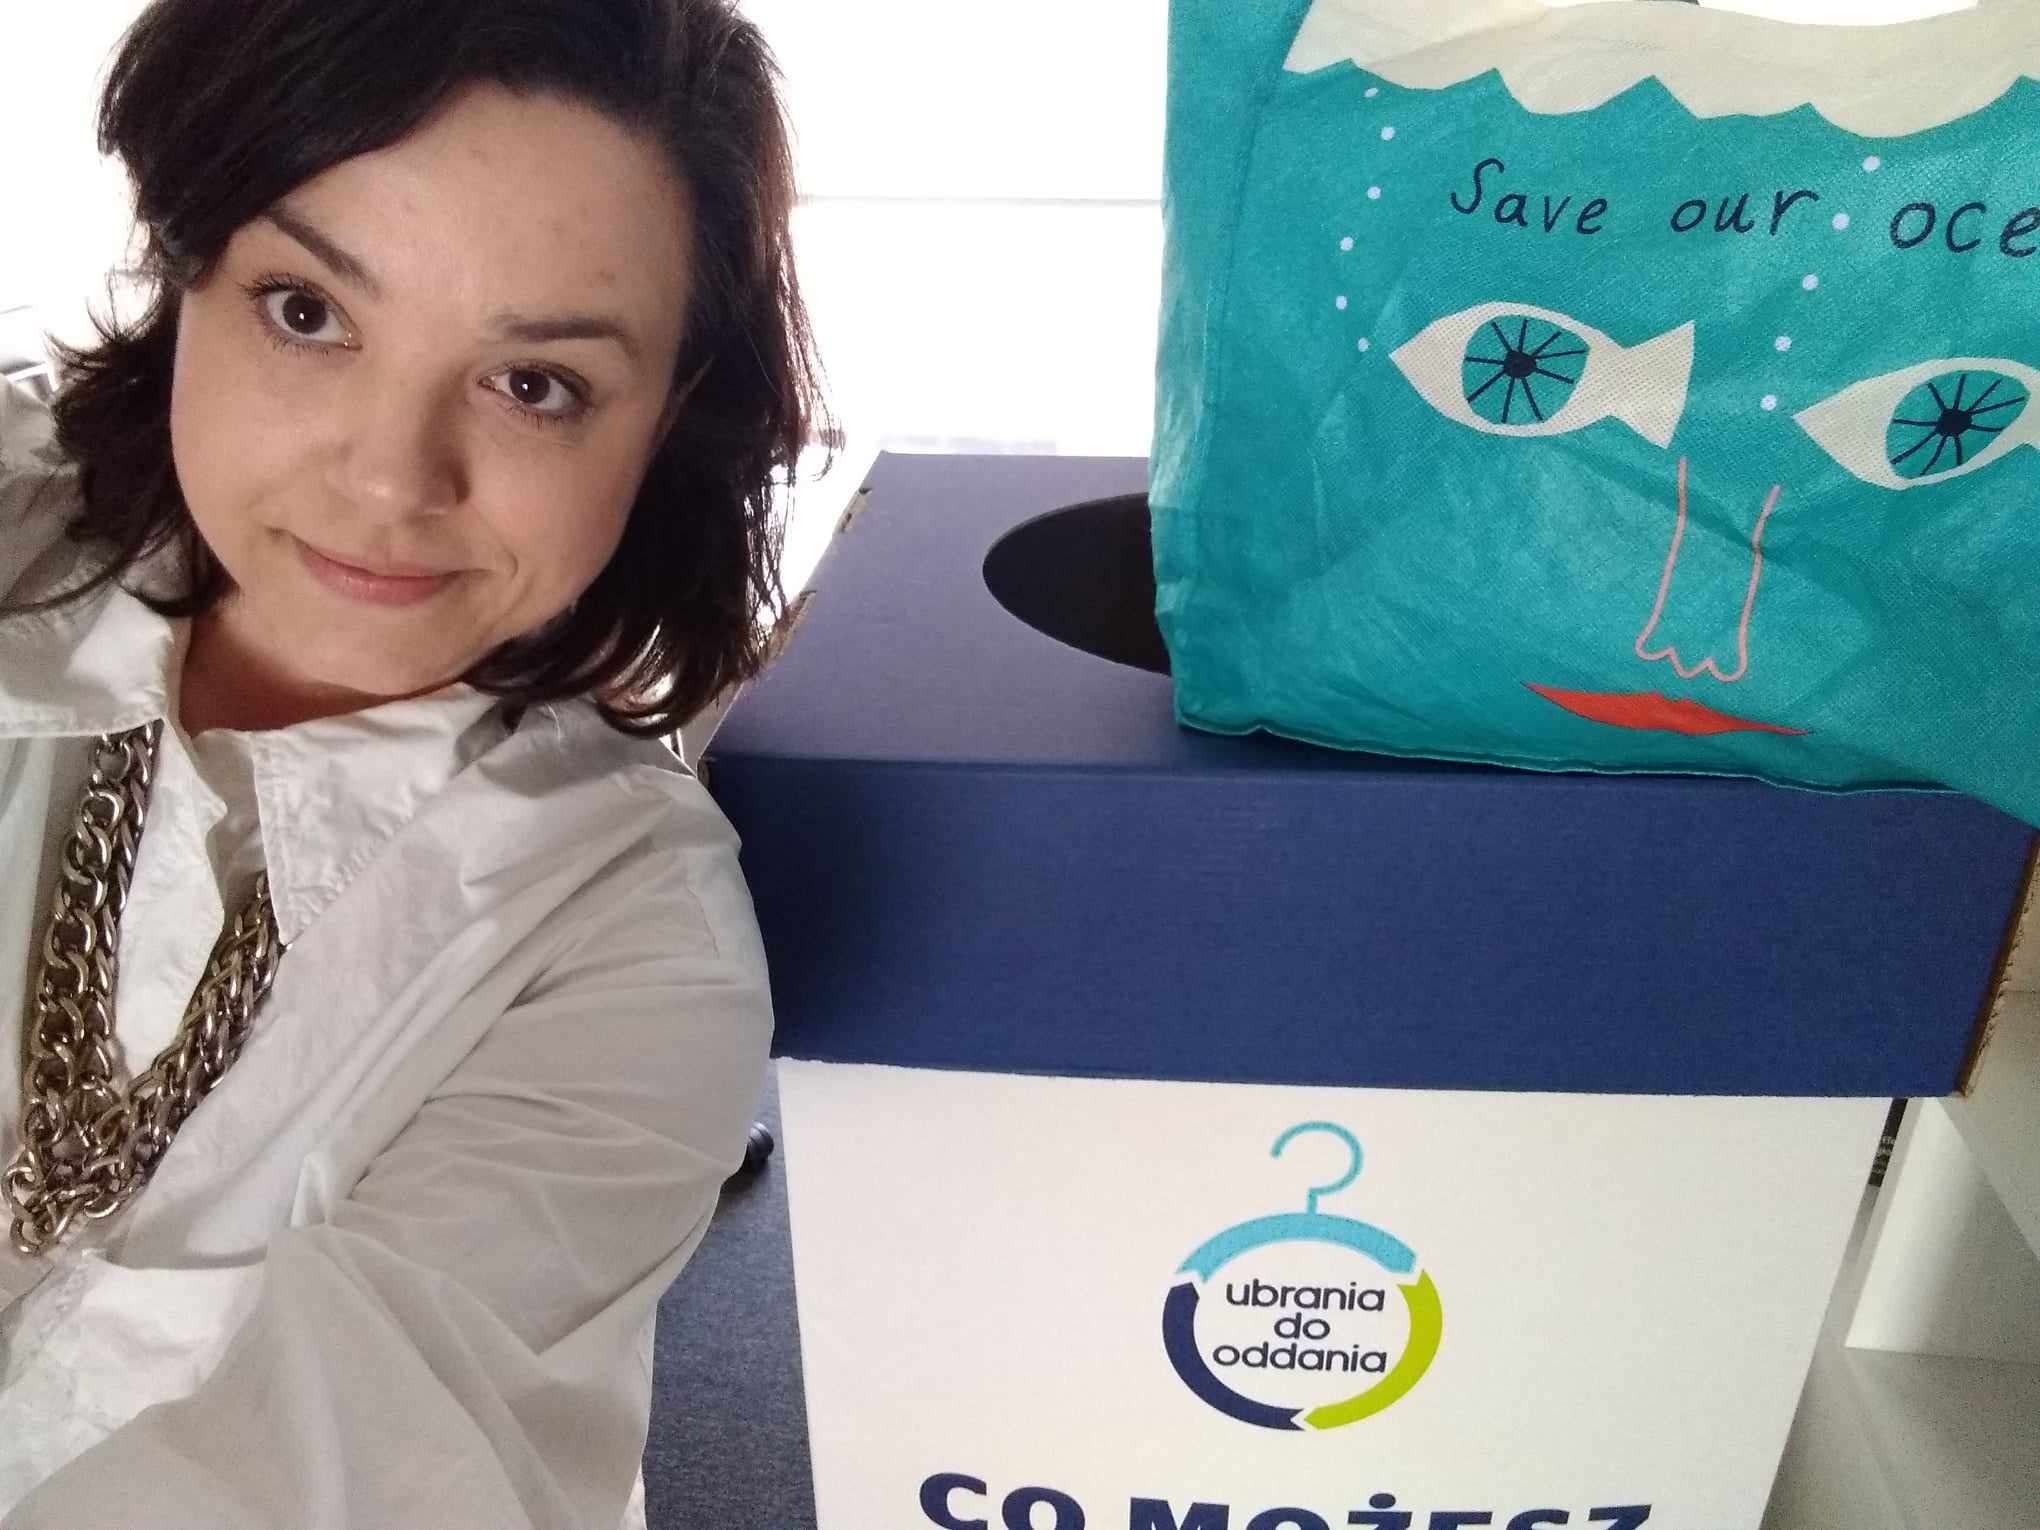 Marta robi selfie na tle pudełka z napisem "ubrania do oddania"